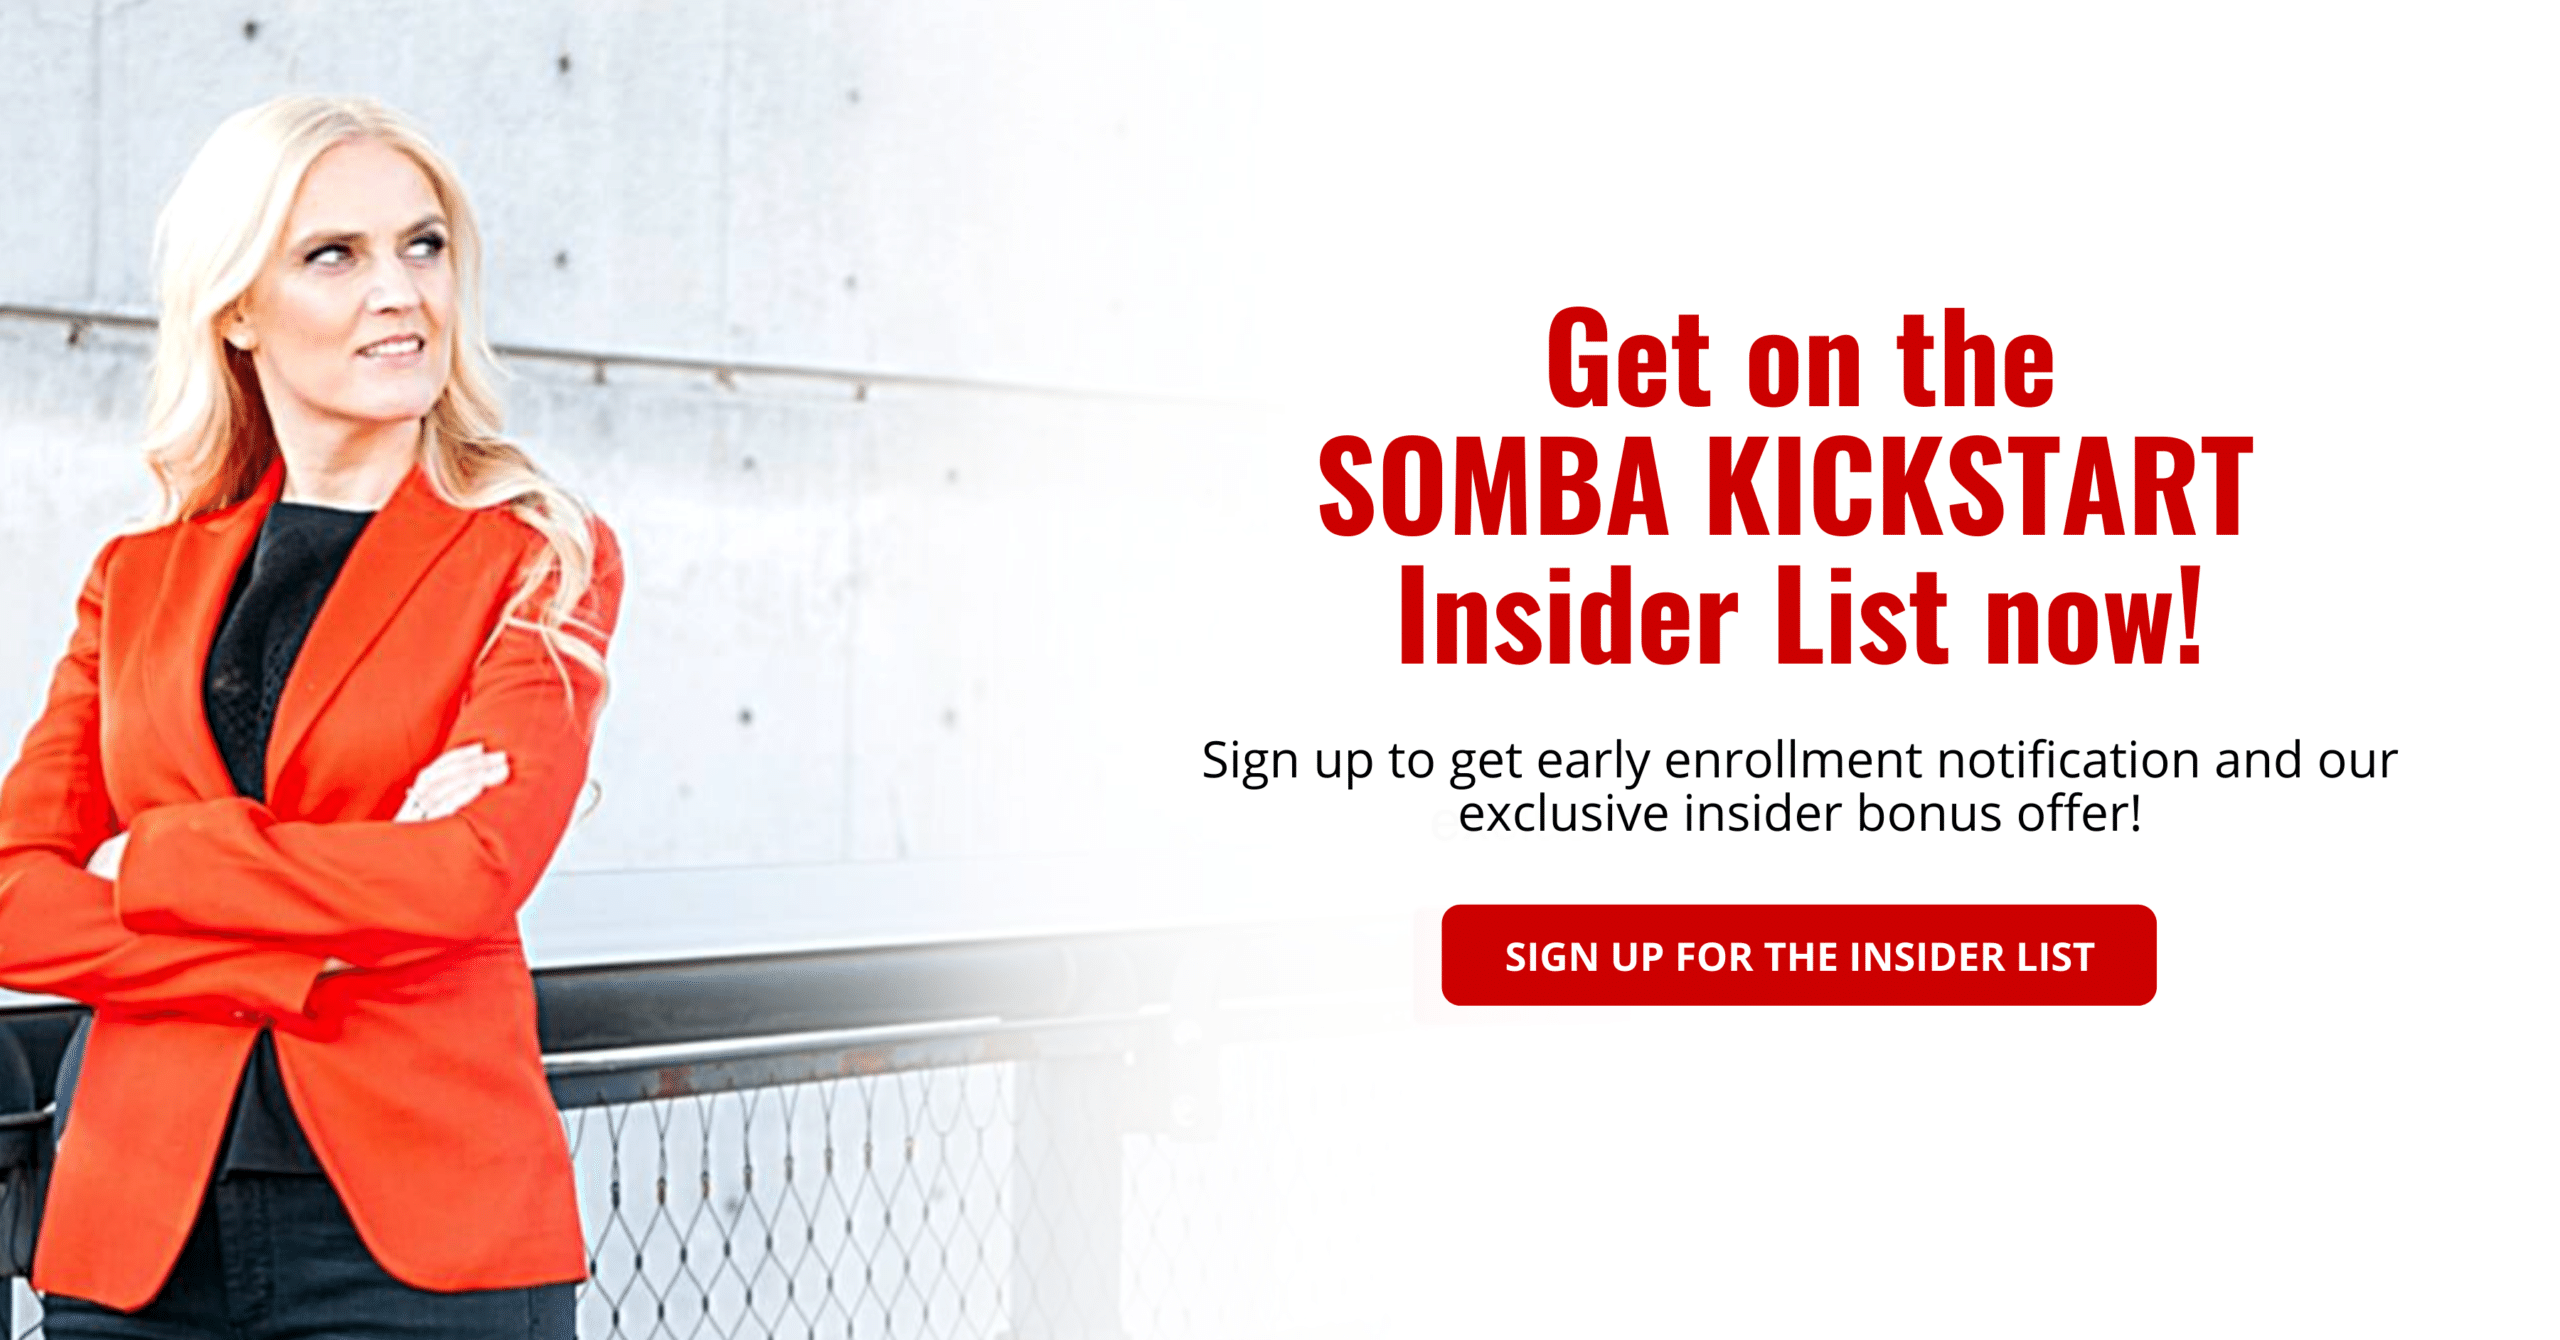 Get on the SOMBA Kickstart Insider List